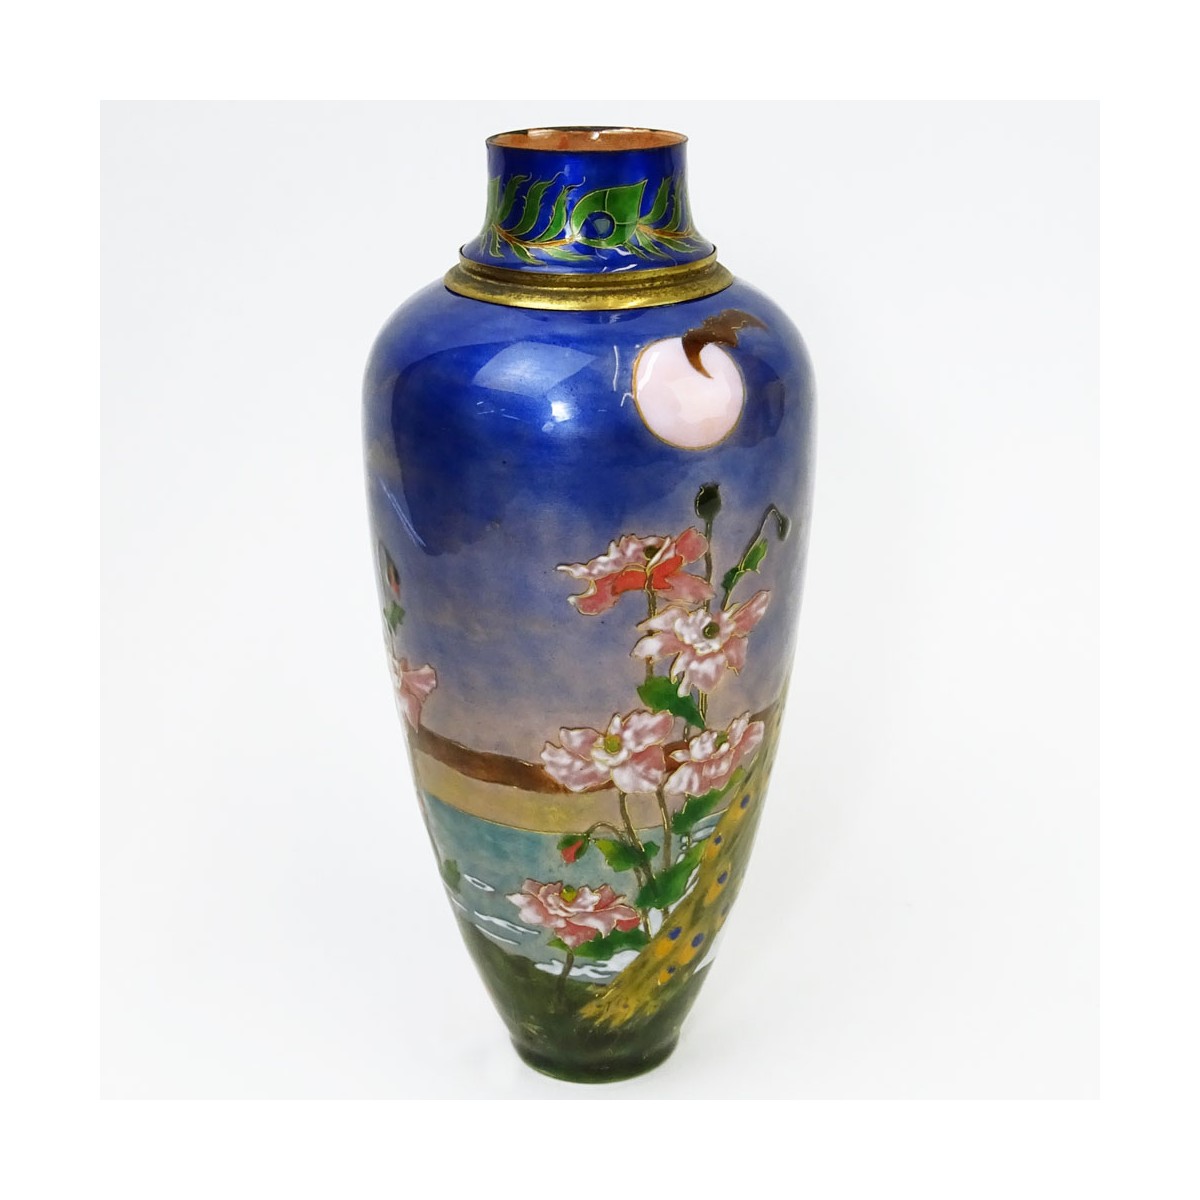 Vintage French Enamel Vase w Peacock